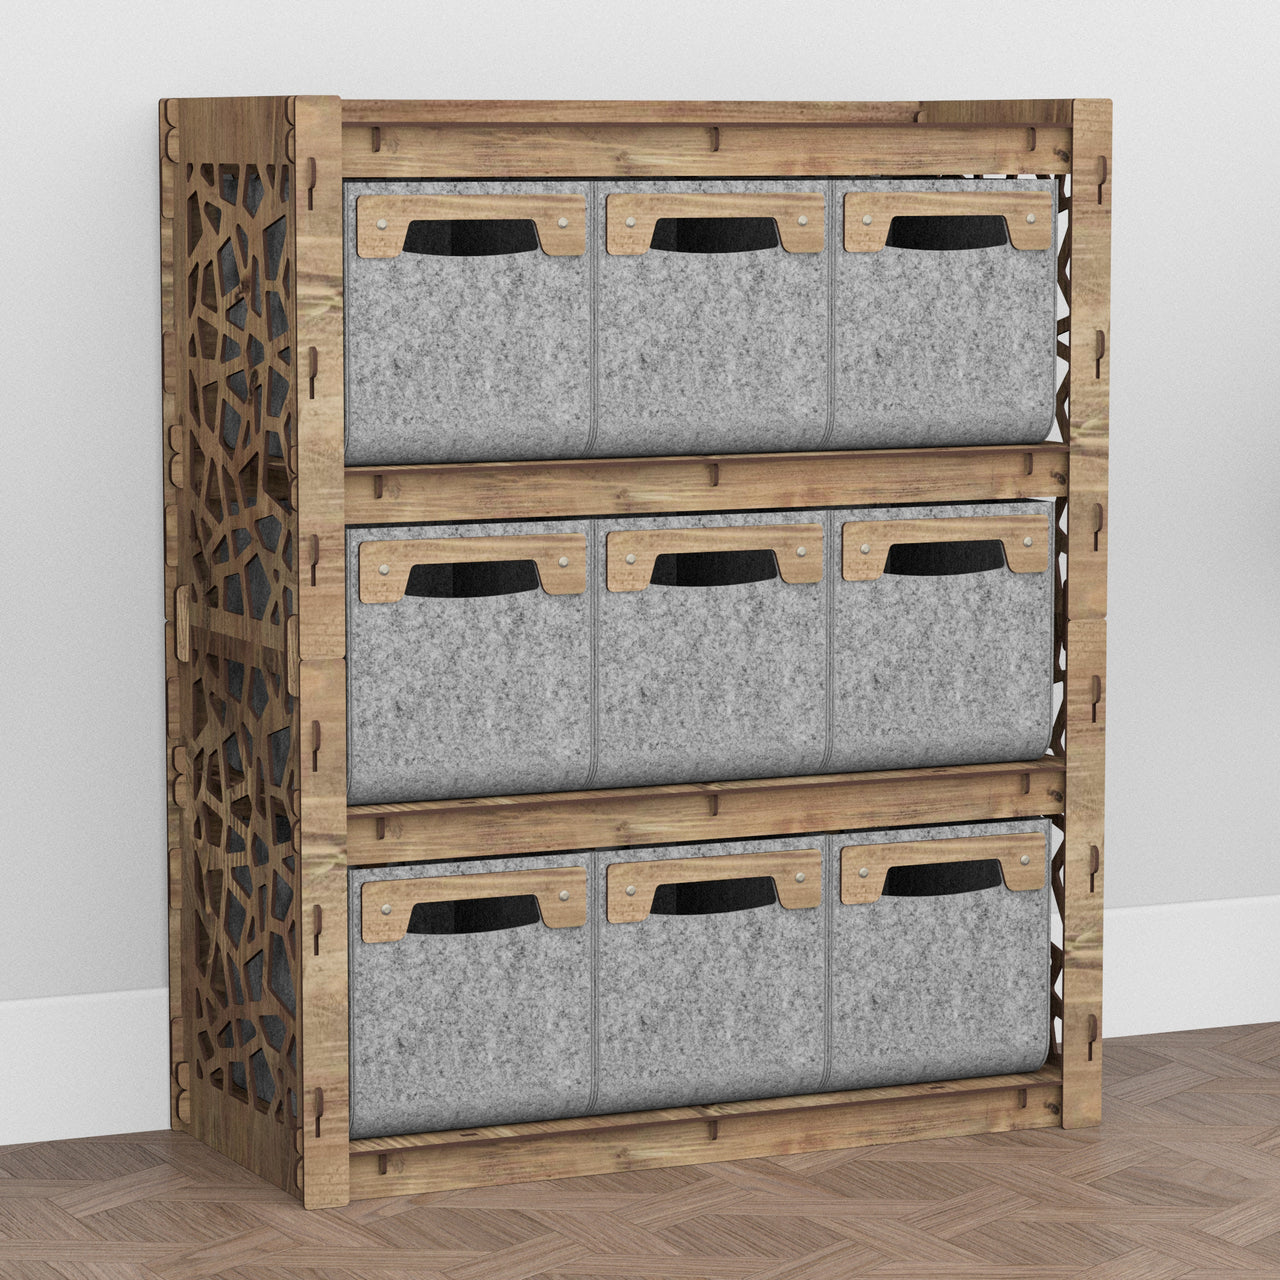 Stones Dresser 9 Drawers Storage Unit [9 SMALL GRAY BINS]